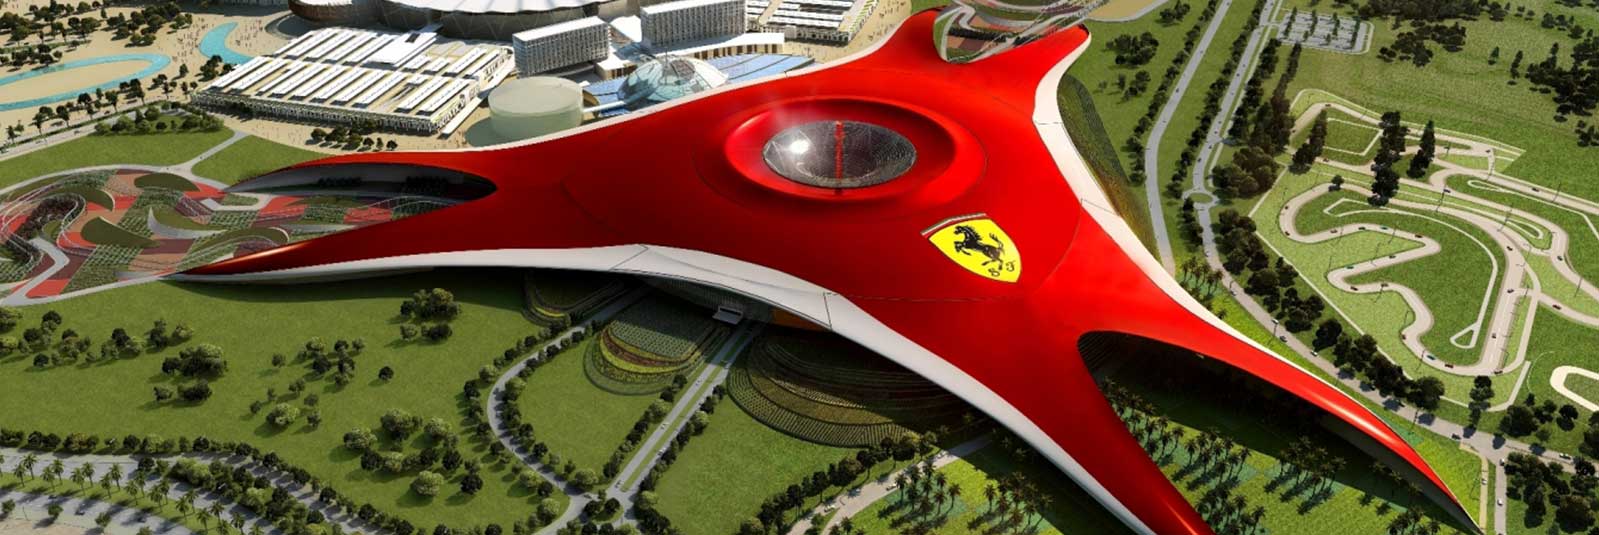 Ferrari-World